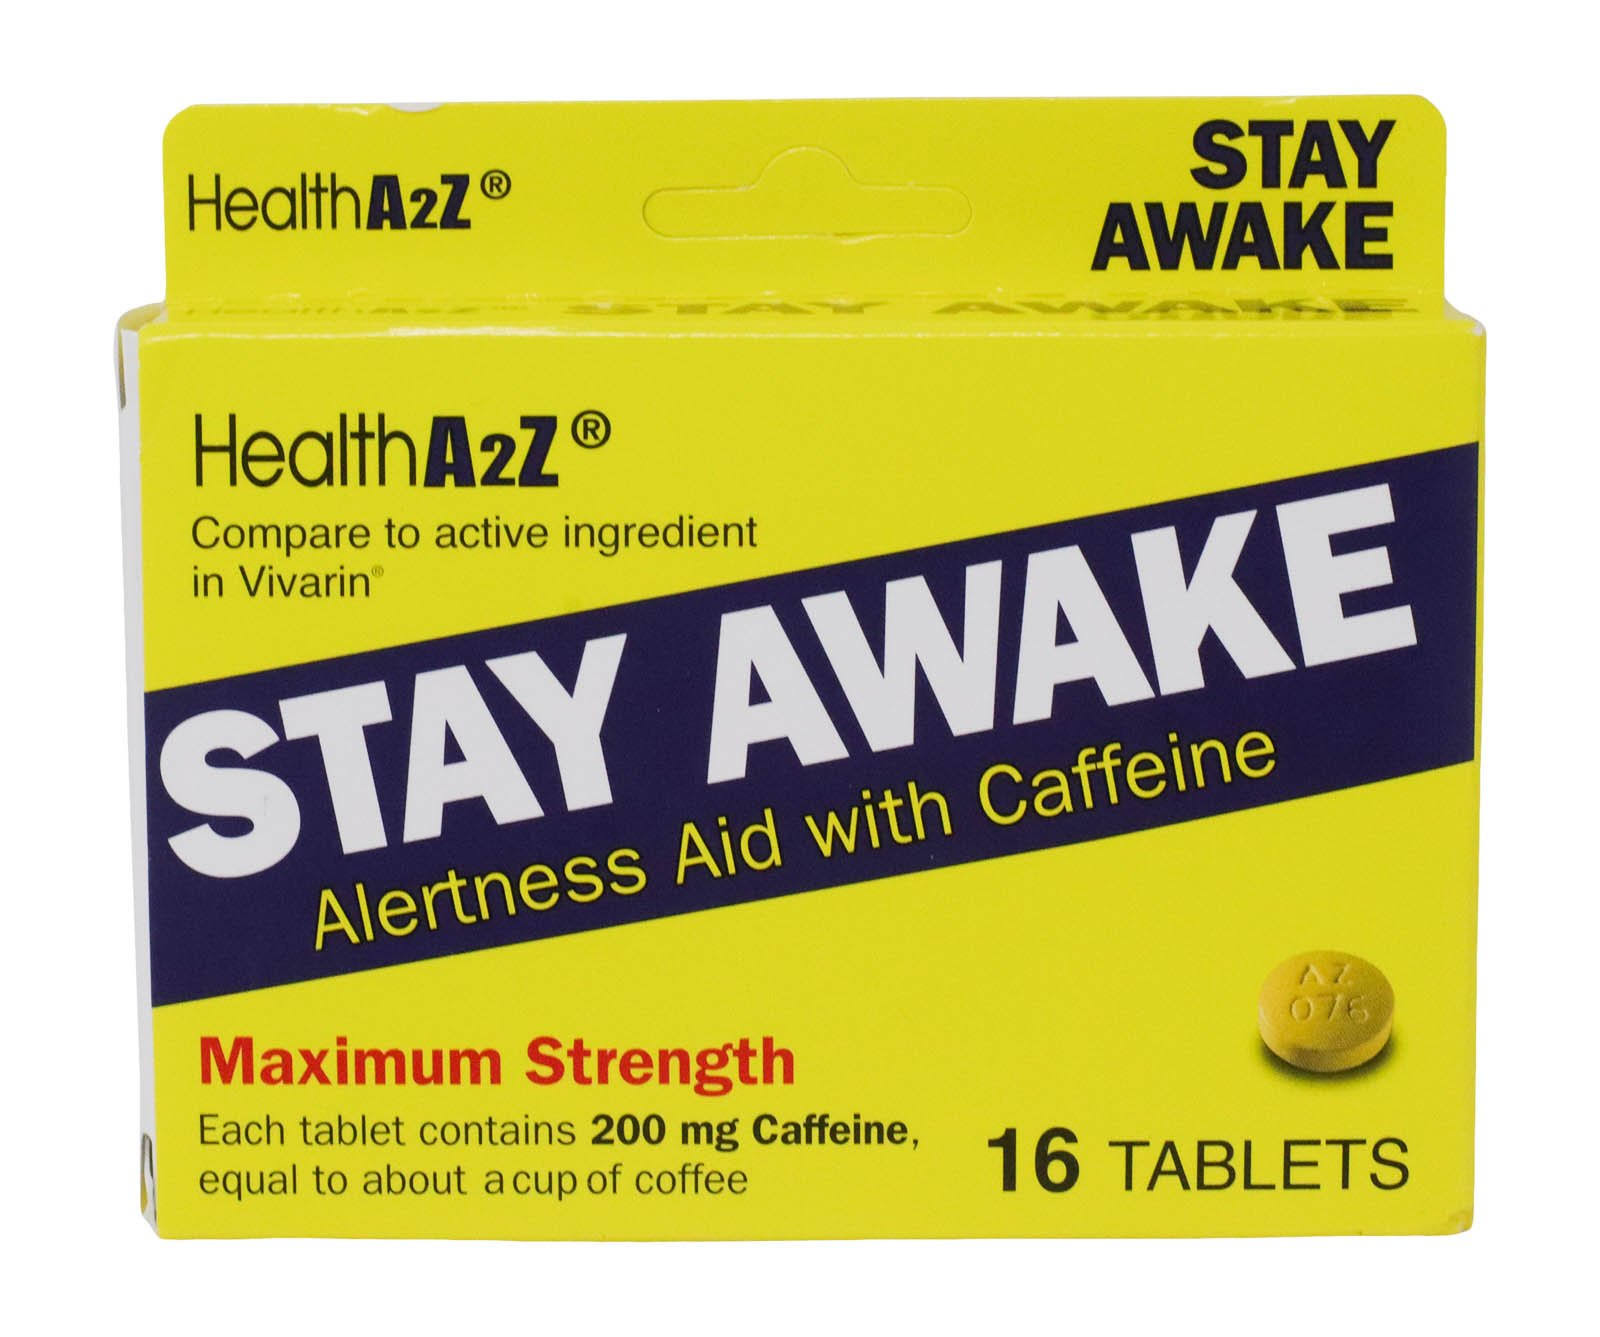 Healtha2z Stay Awake Alertness Aid, with Caffeine, Maximum Strength, Tablets - 16 tablets